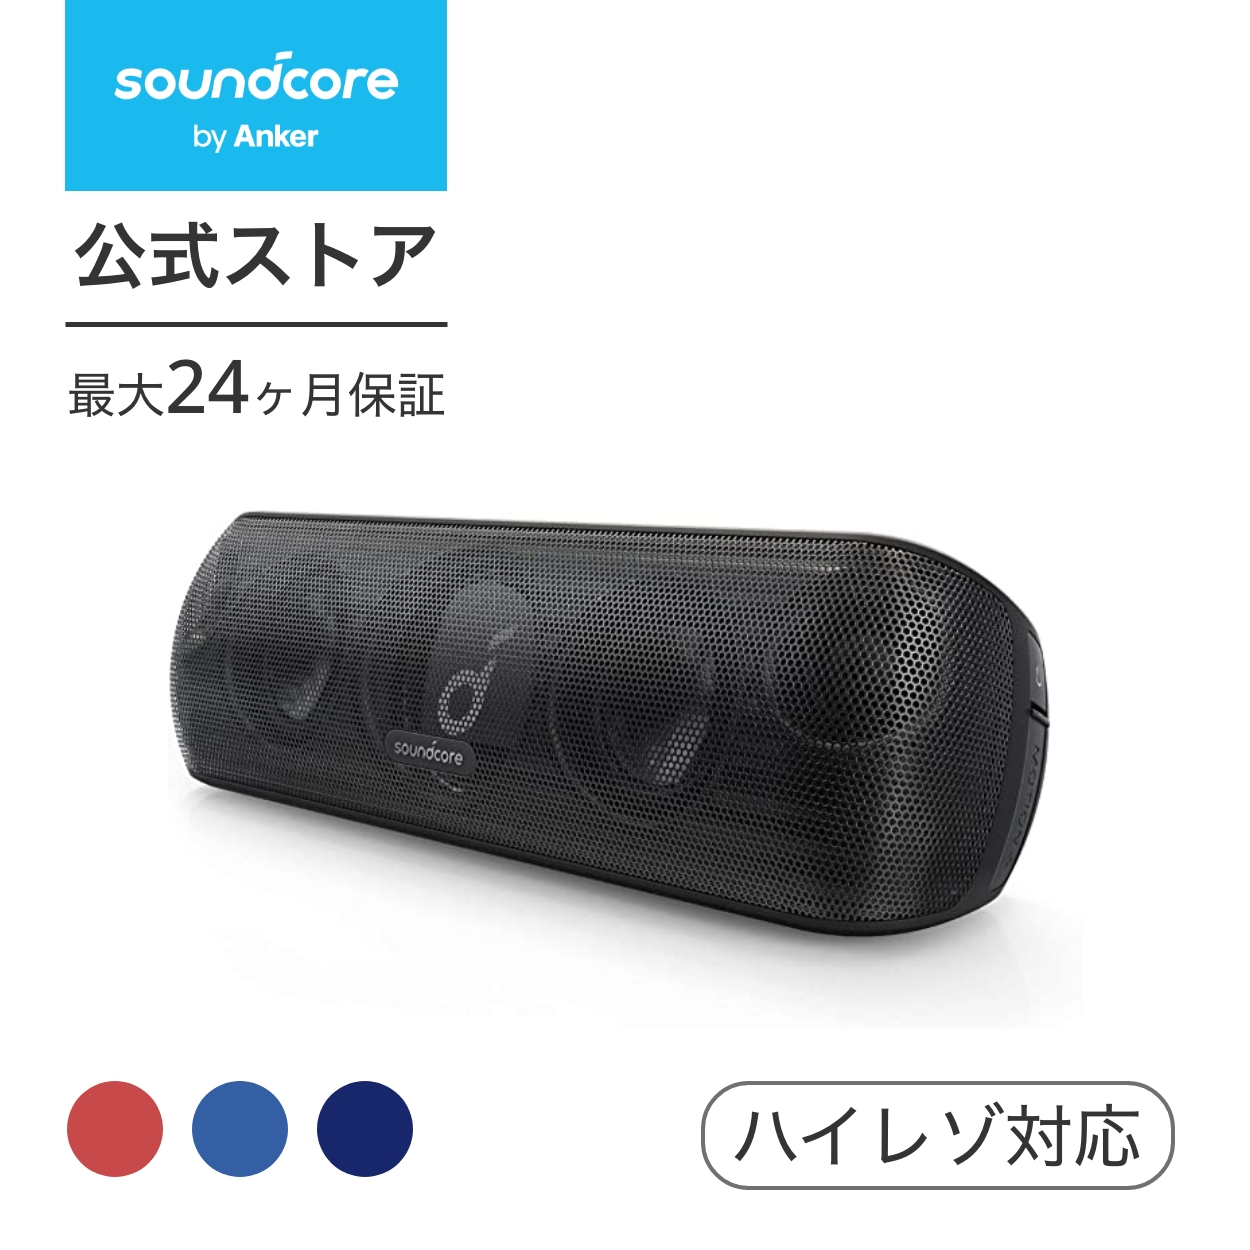 SoundcoreMotion+（30WBluetooth5.0スピーカーbyAnker）【ハイレゾ対応/12時間連続再生/Qualcomm&#174;aptX&#8482;audio対応/BassUpテクノロジー/IPX7防水規格/USB-C入力】